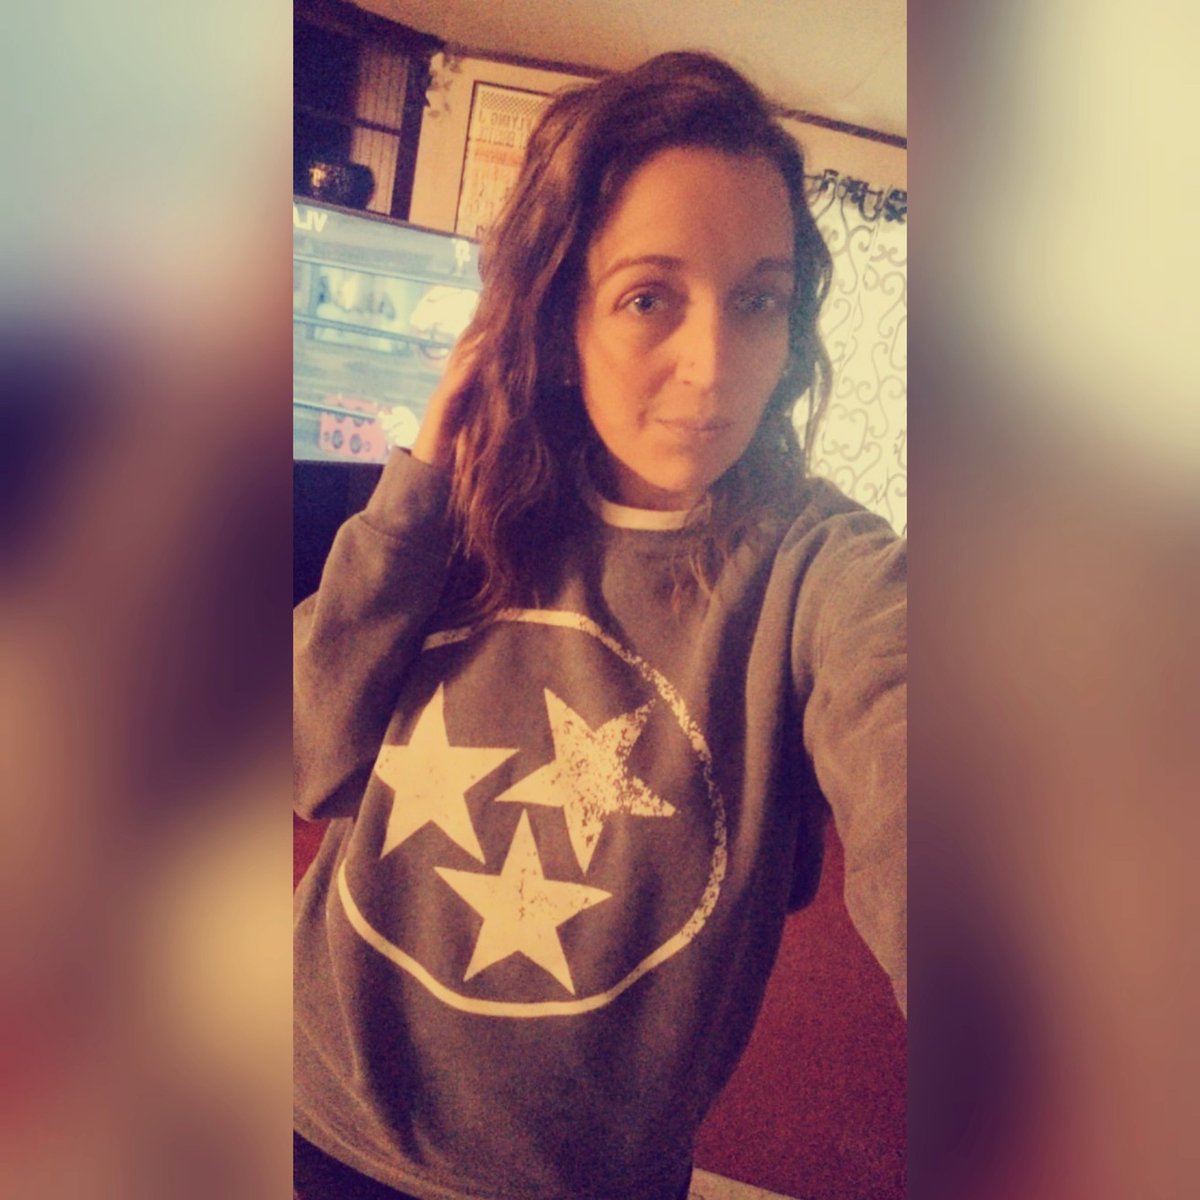 You can never go wrong with a tri-star sweatshirt 💙 ☺️ 💙 @givehersix #sweatshirtseason